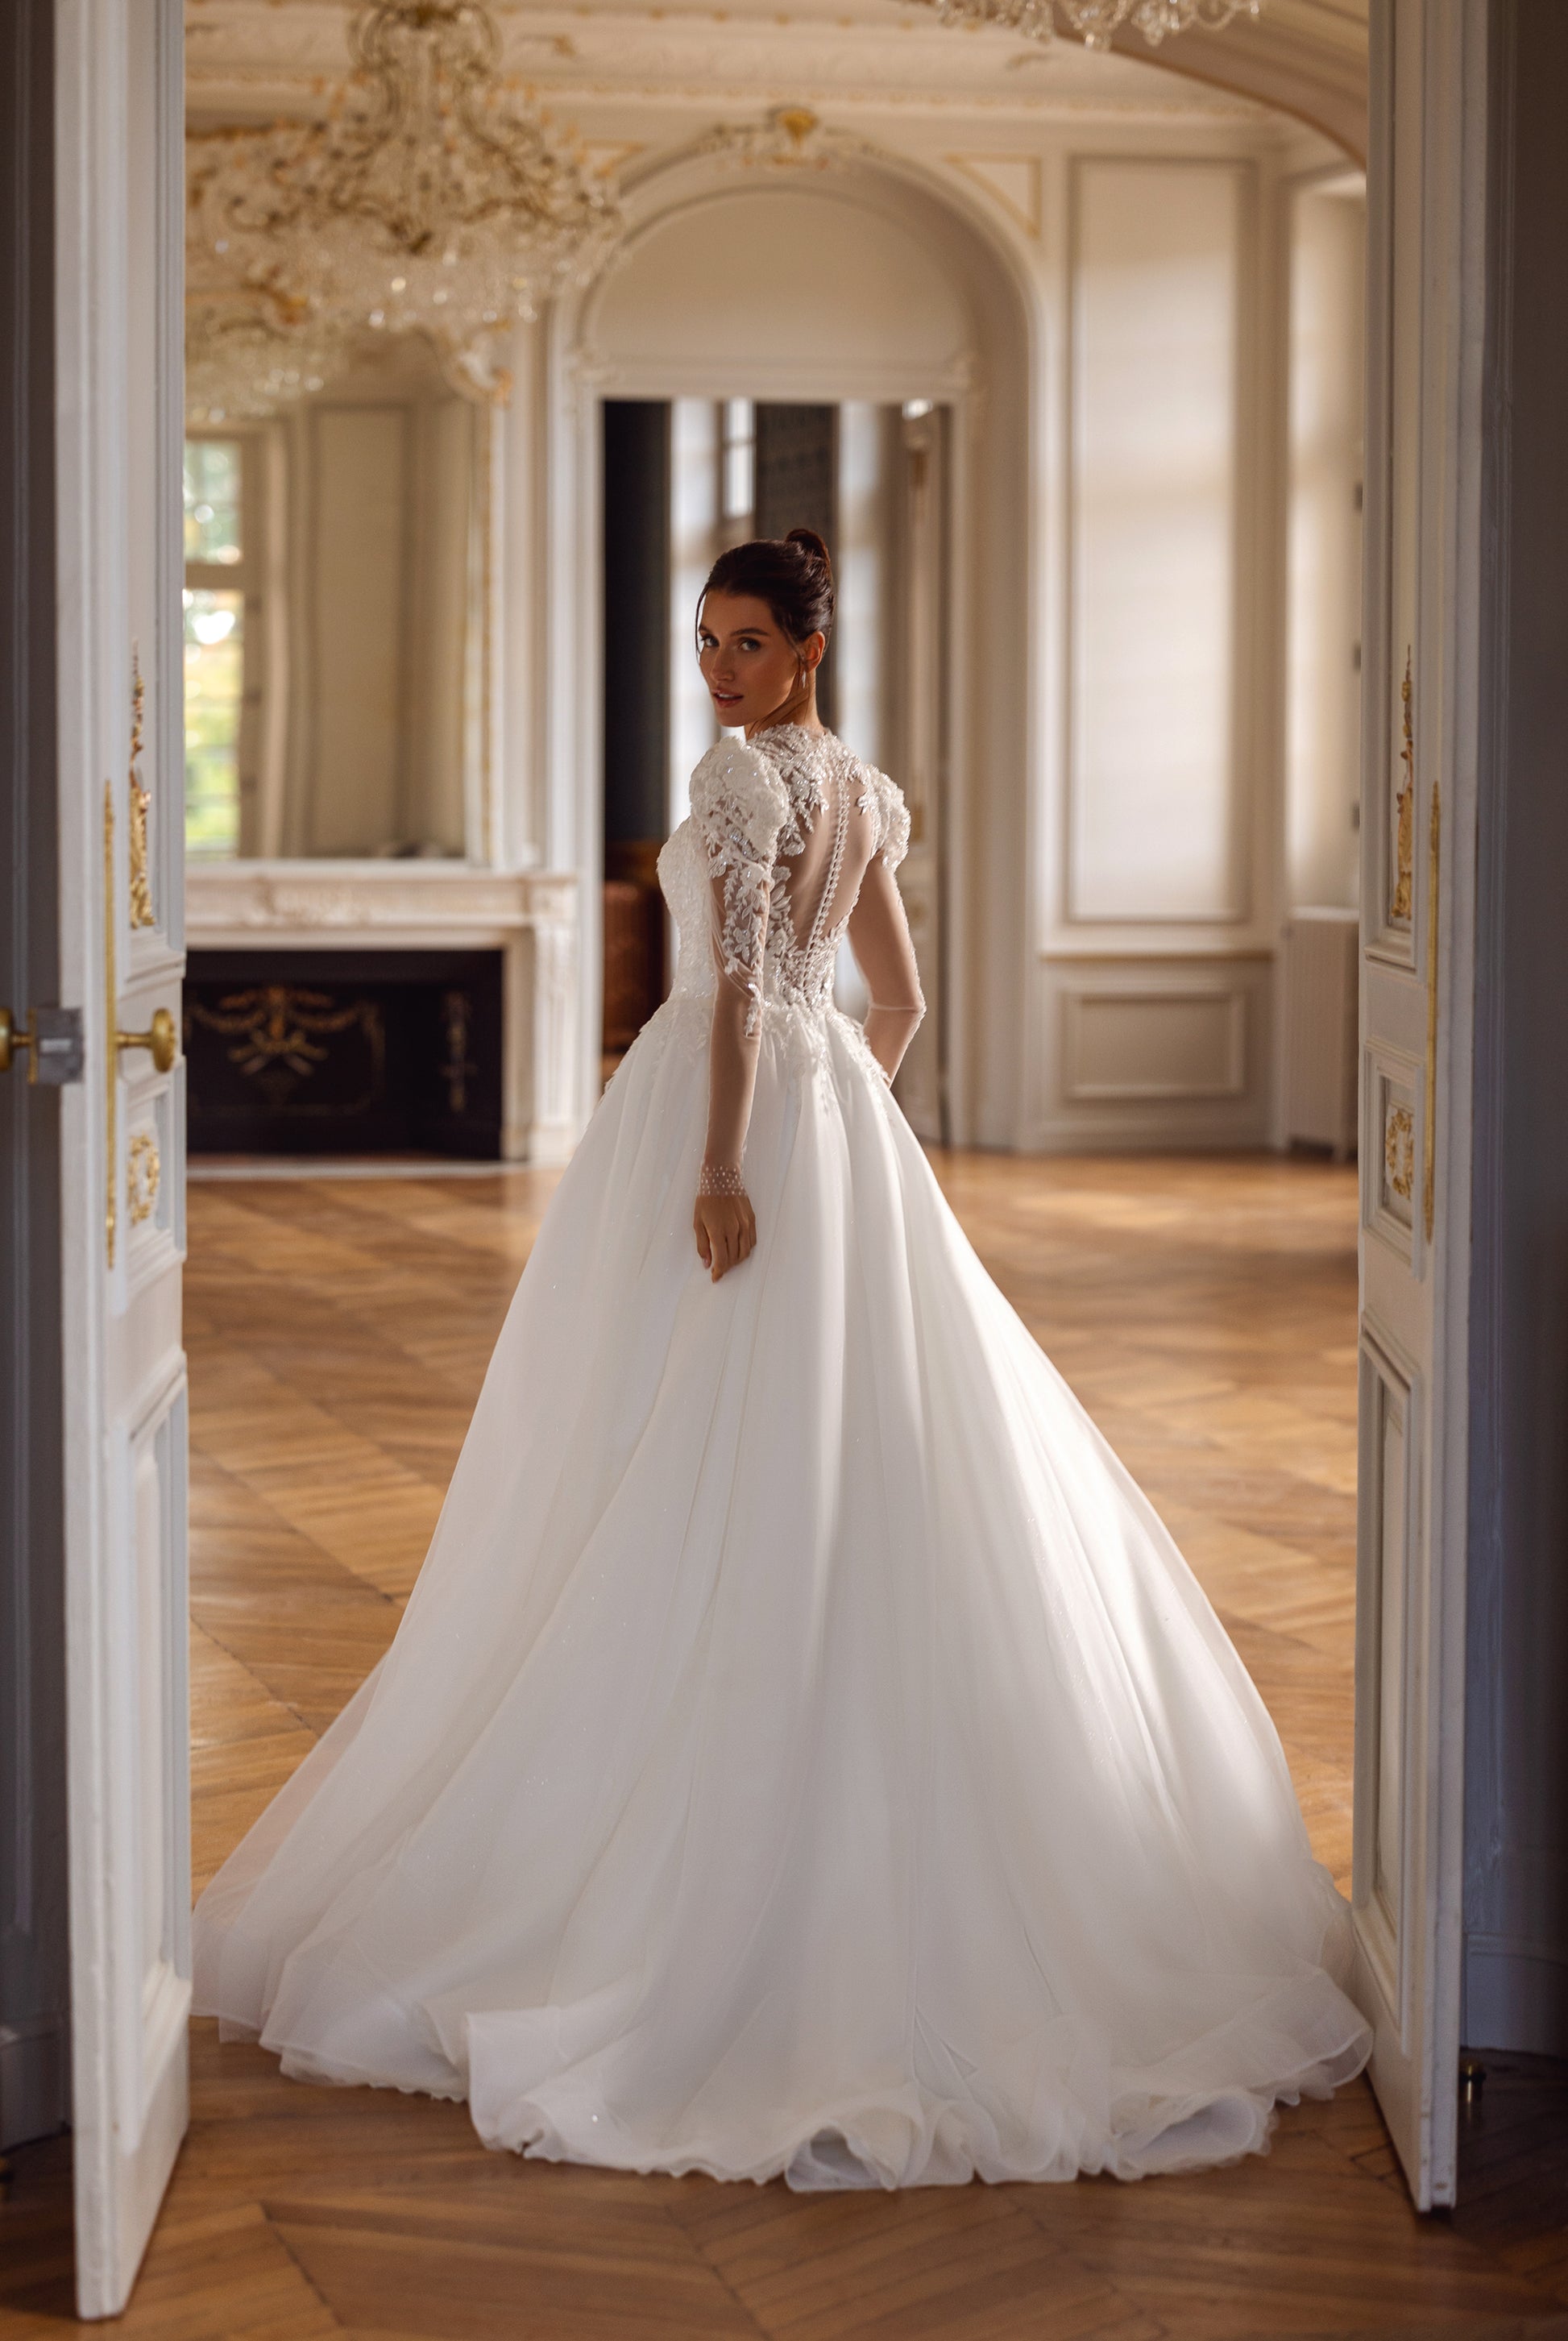 Violetta-Amarante A-line Hight neck Milk Wedding dress